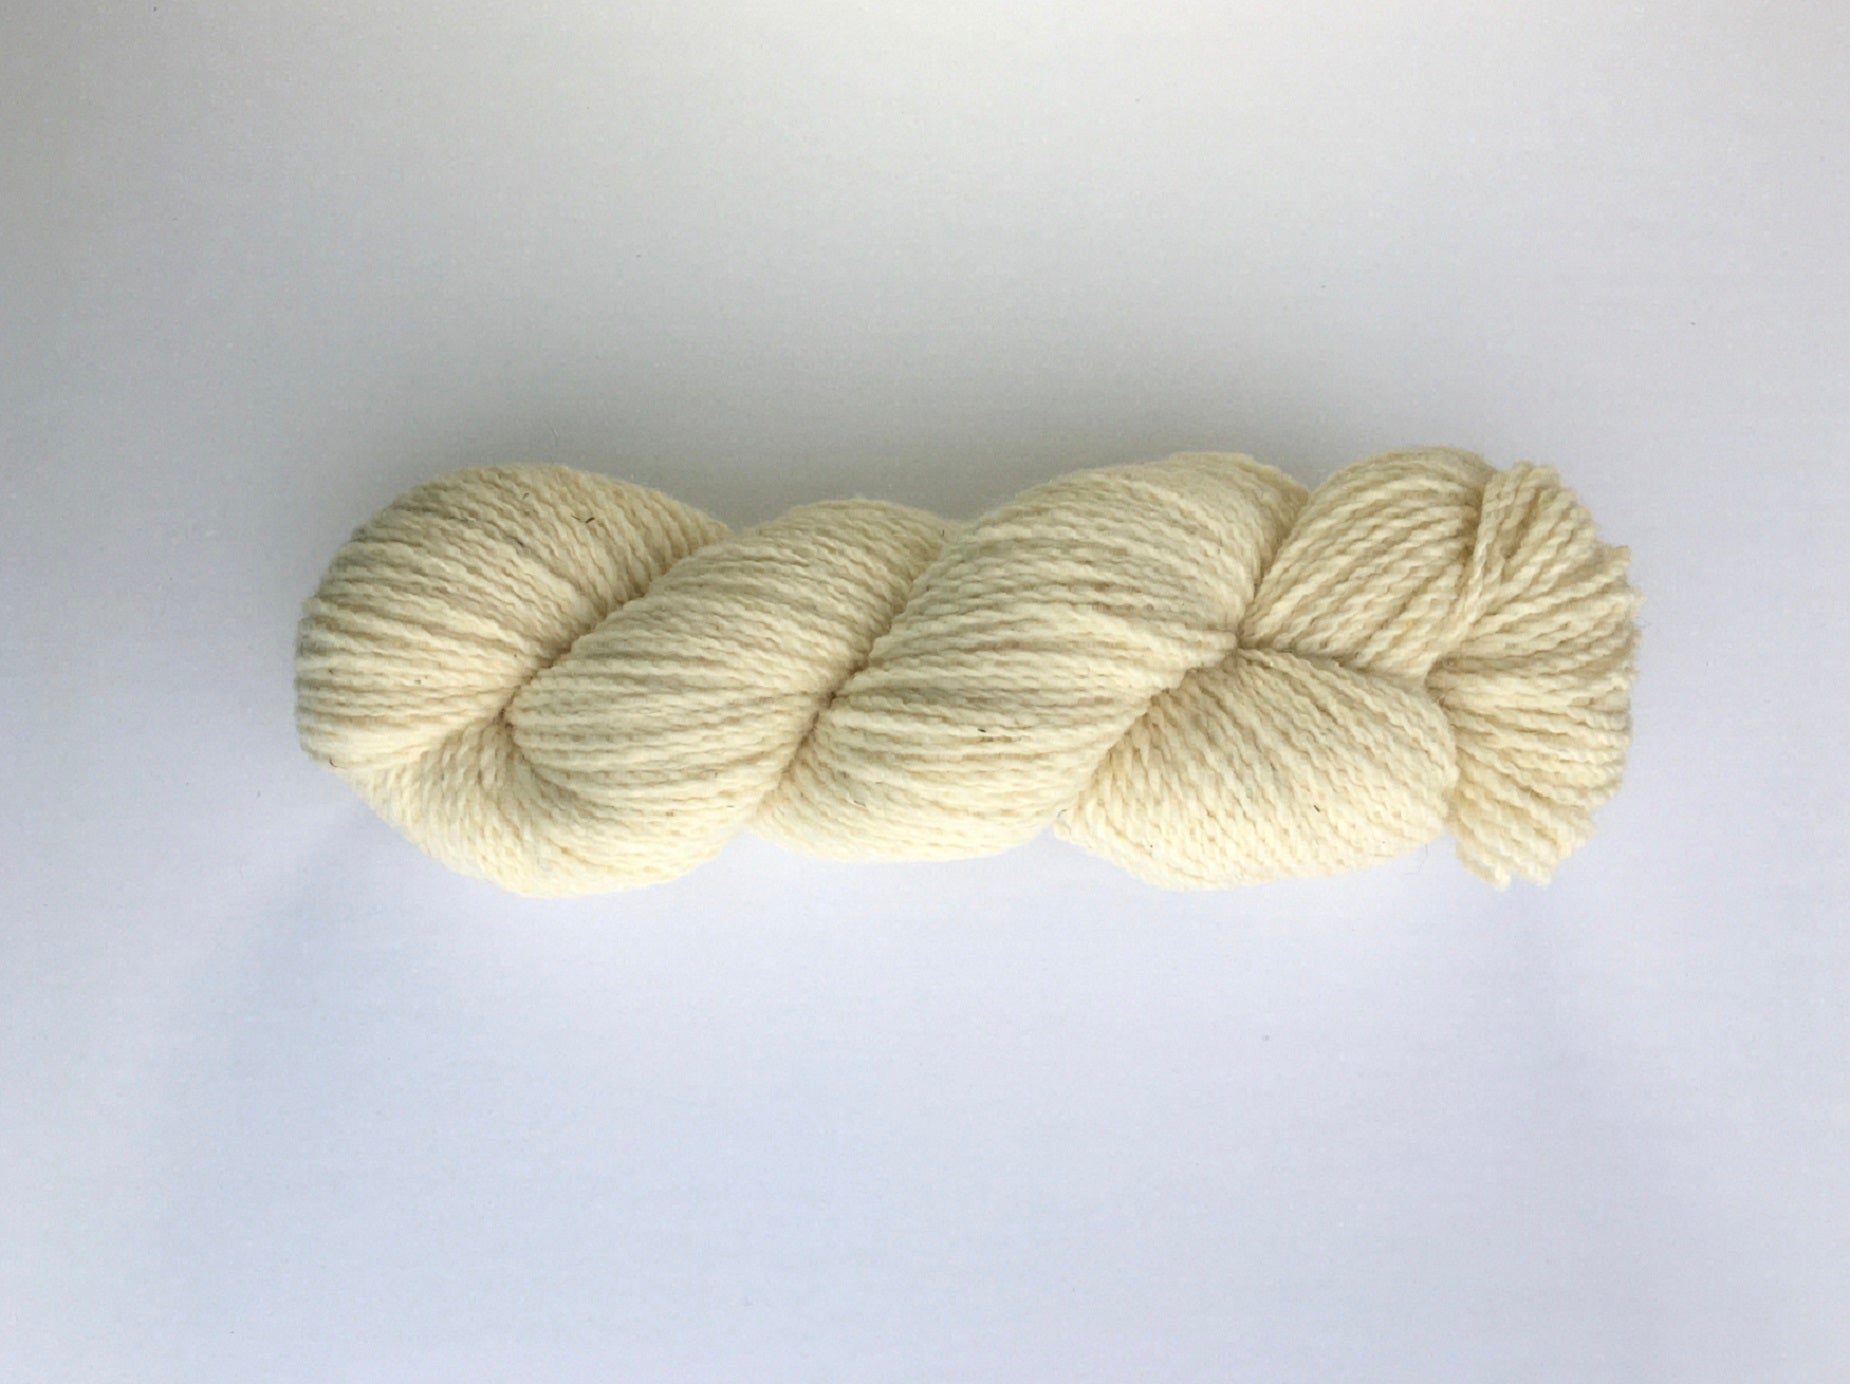 One hank of creamy white Ramo Worsted weight yarn